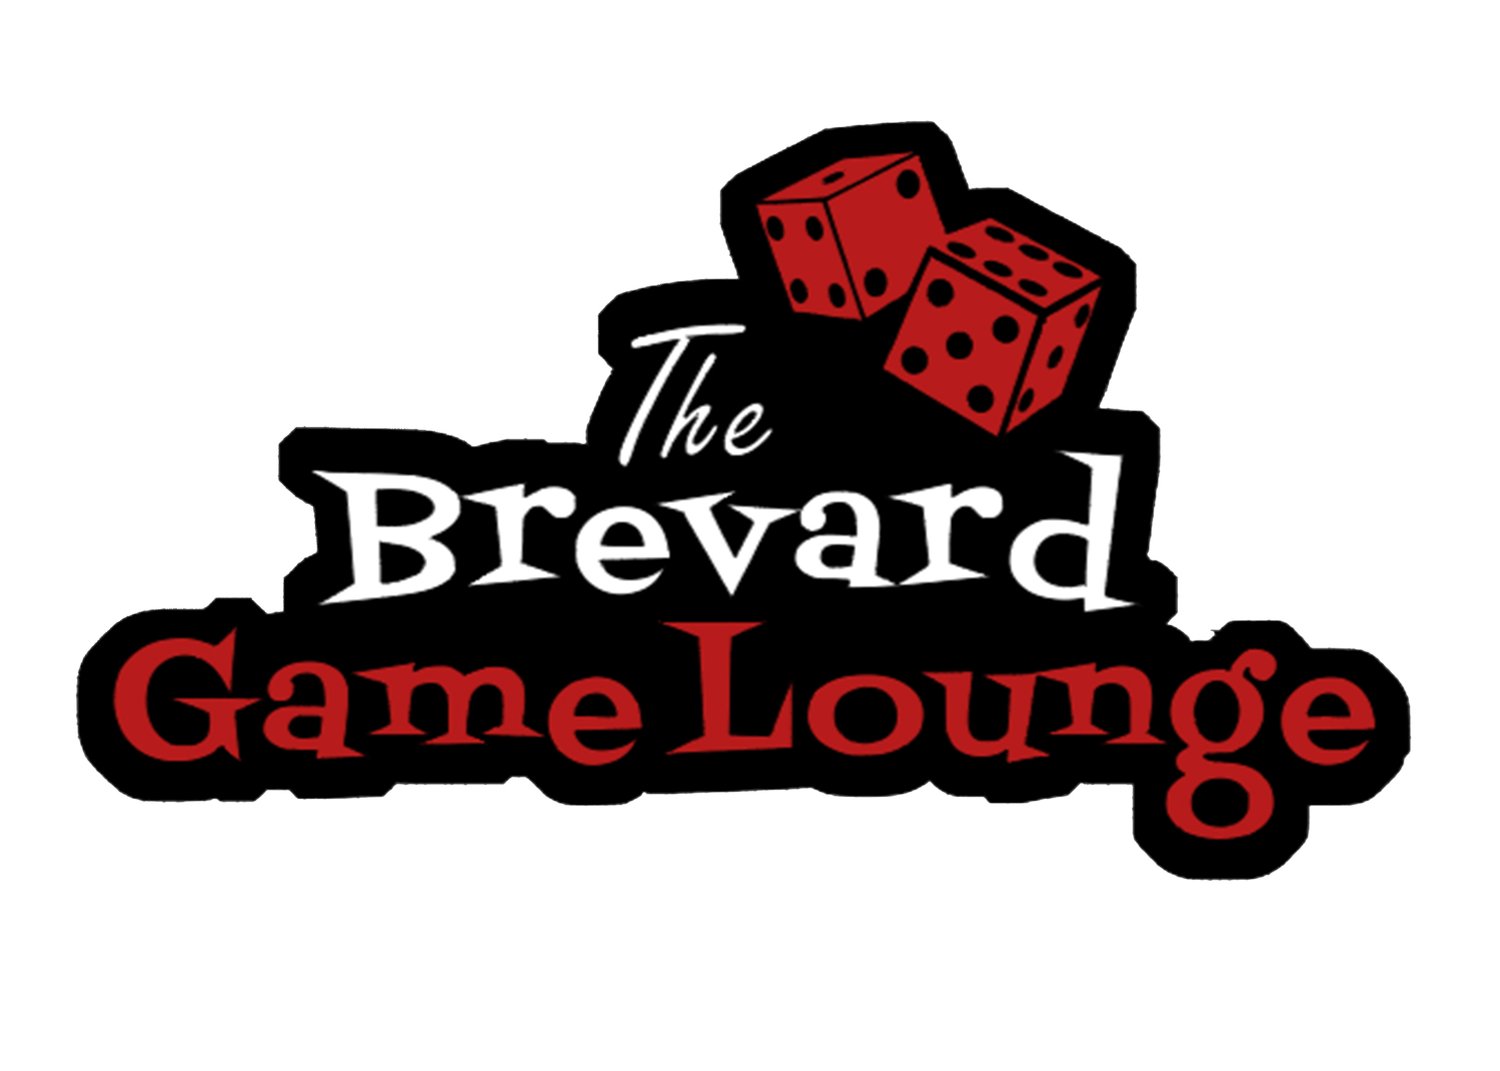 The Brevard Gaming Lounge